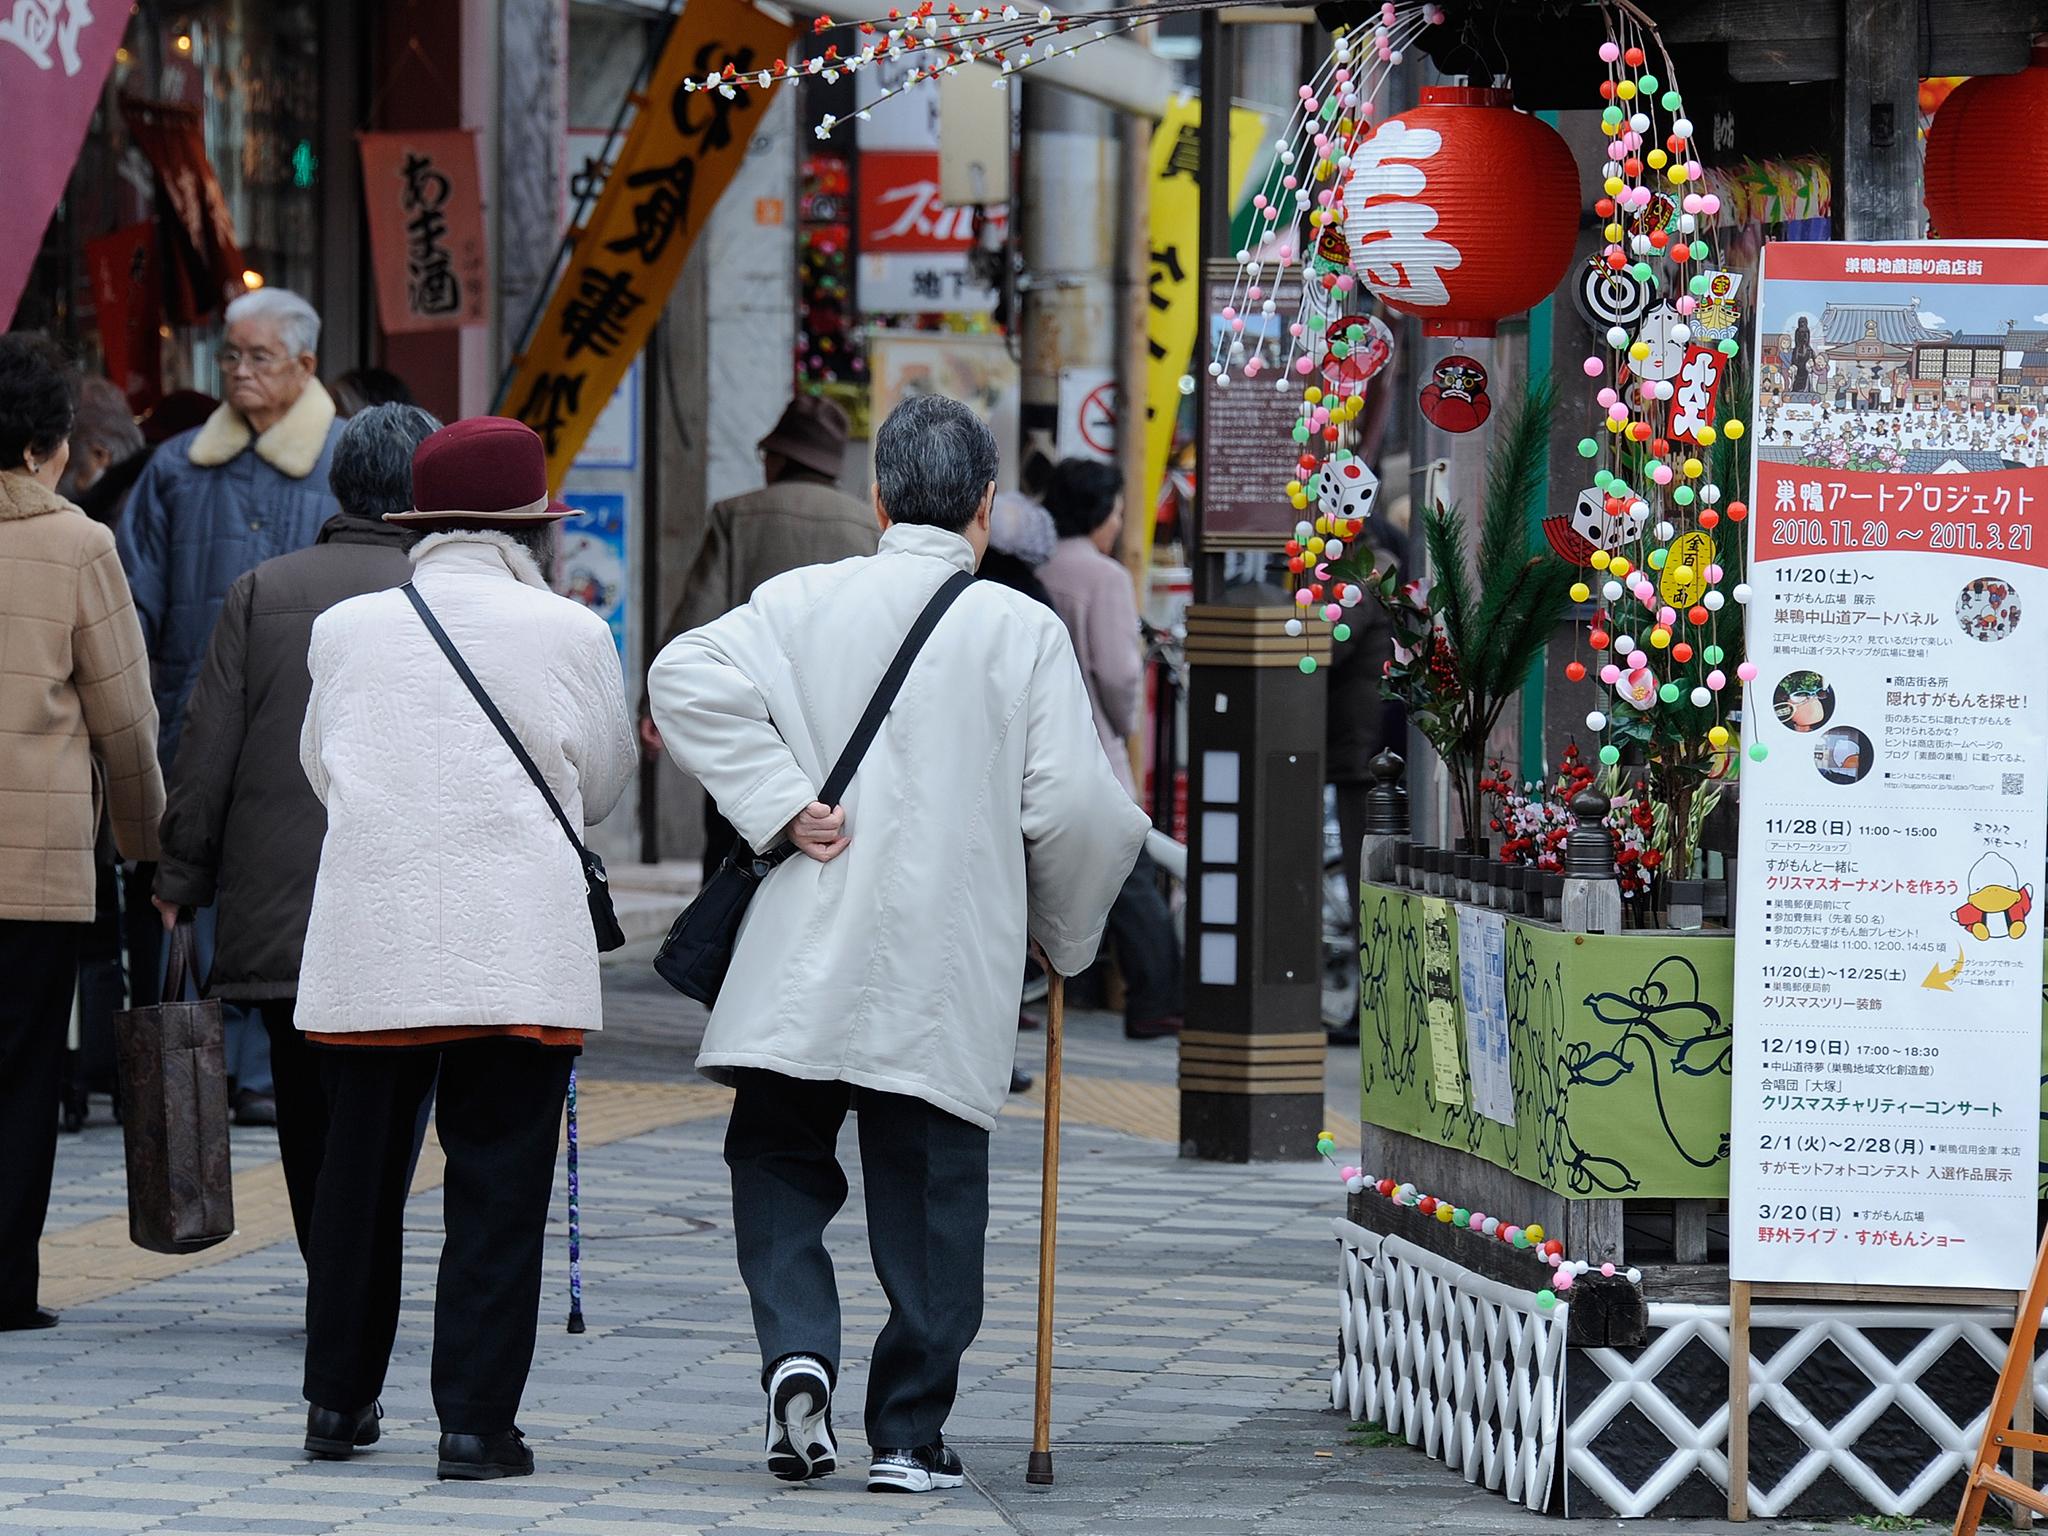 File. Elderly people walk in the street at Kouganji Temple in Tokyo, Japan